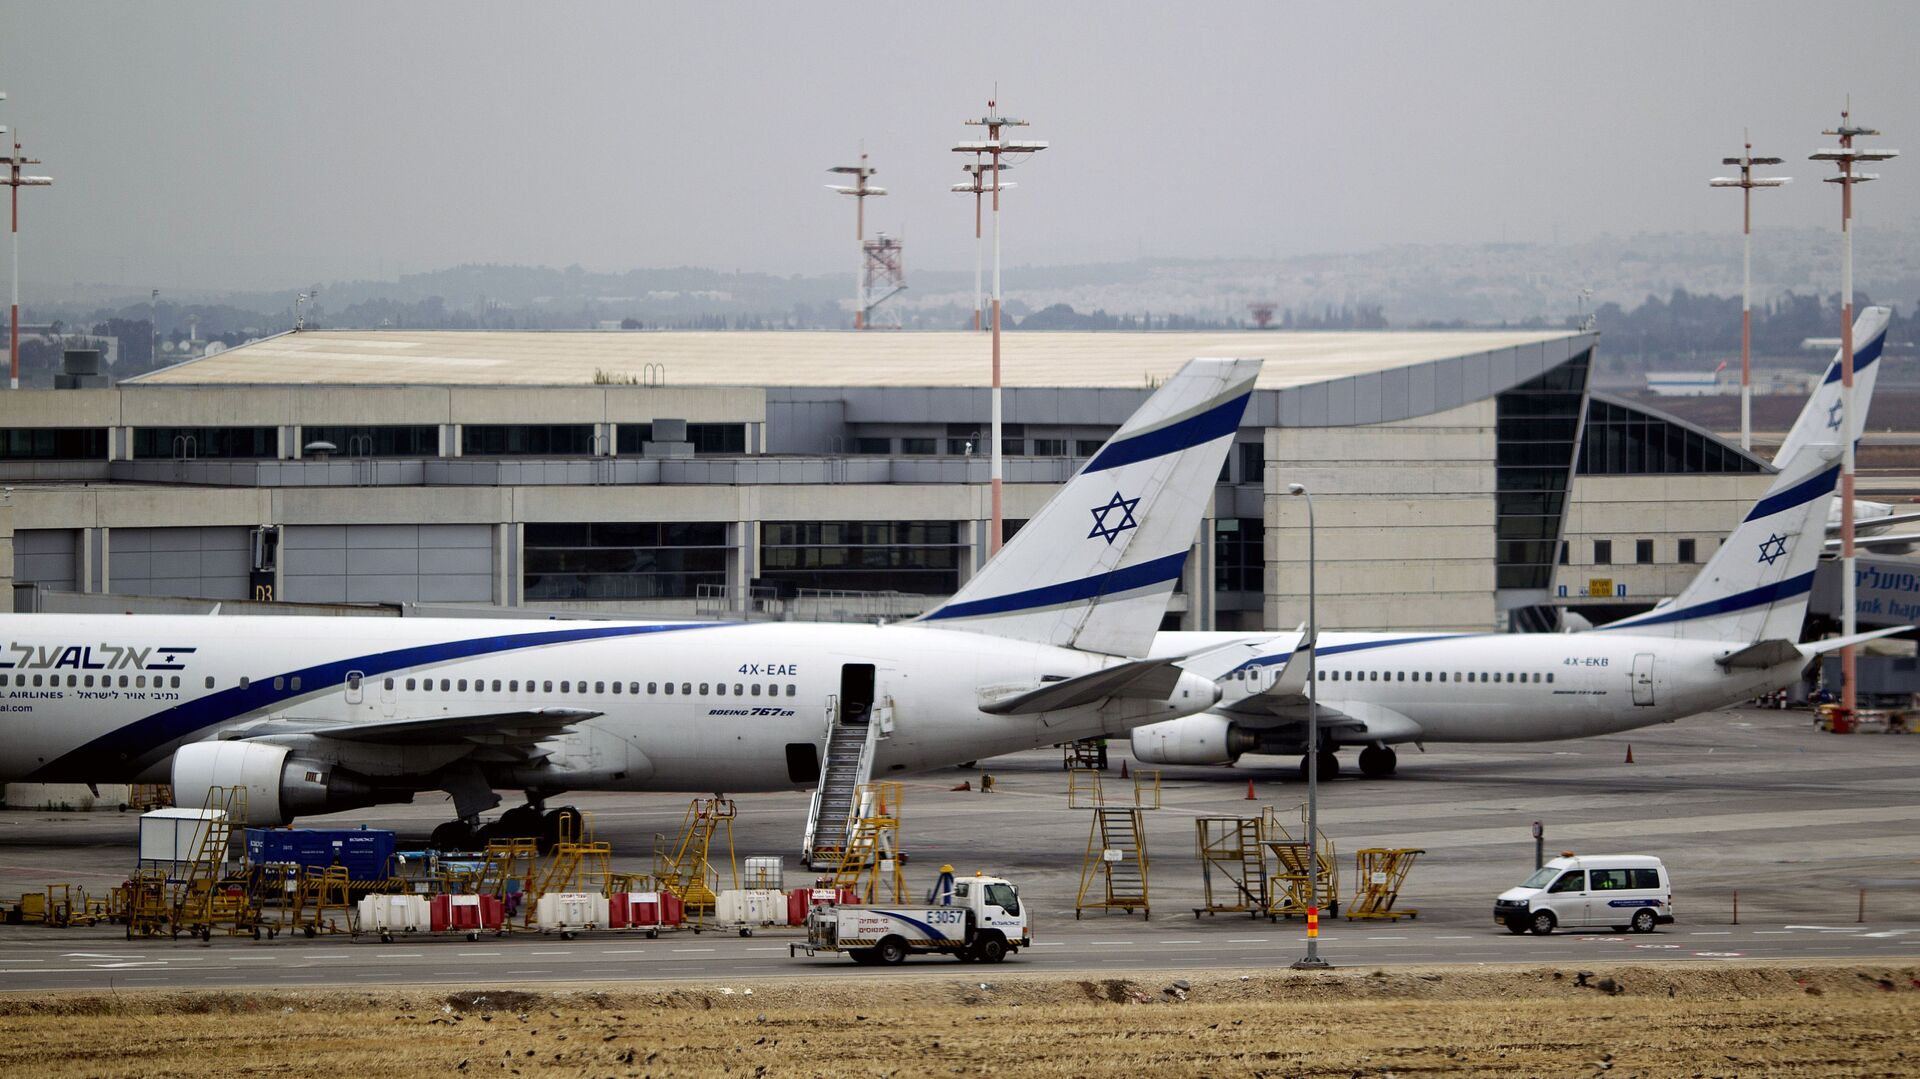 مطار بن غوريون الدولي في تل أبيب، إسرائيل 21 أبريل/ نيسان 2013 - سبوتنيك عربي, 1920, 26.02.2022